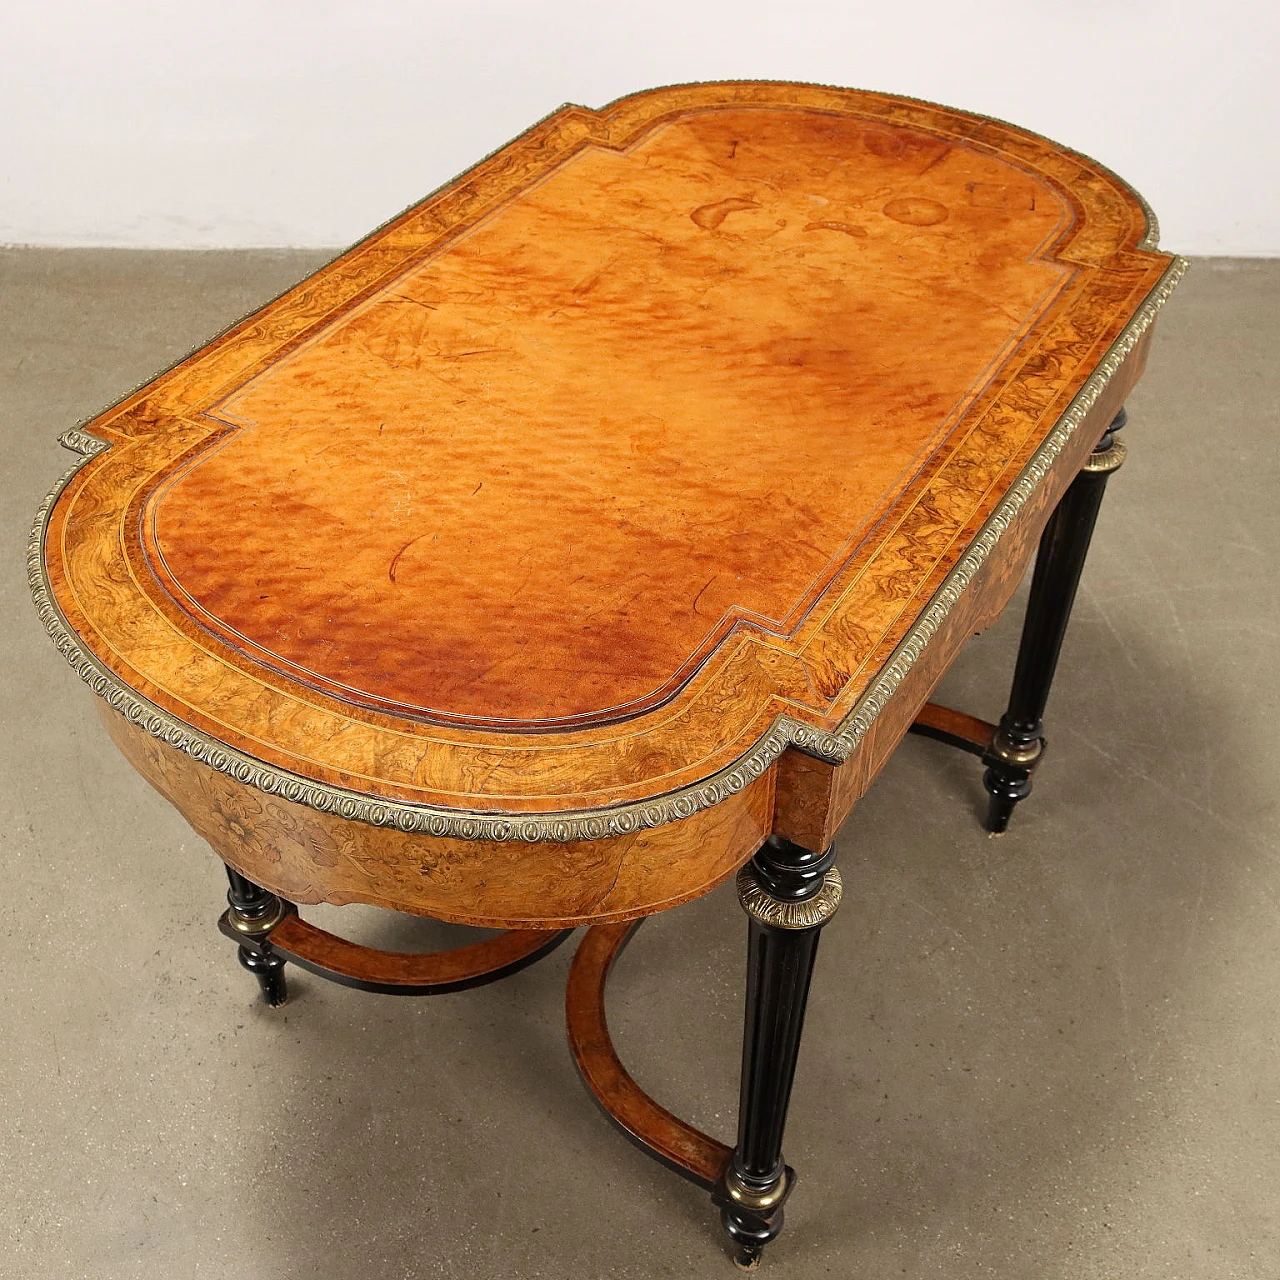 Walnut and maple burl desk by W.M. Johnson & Son, 19th century 3